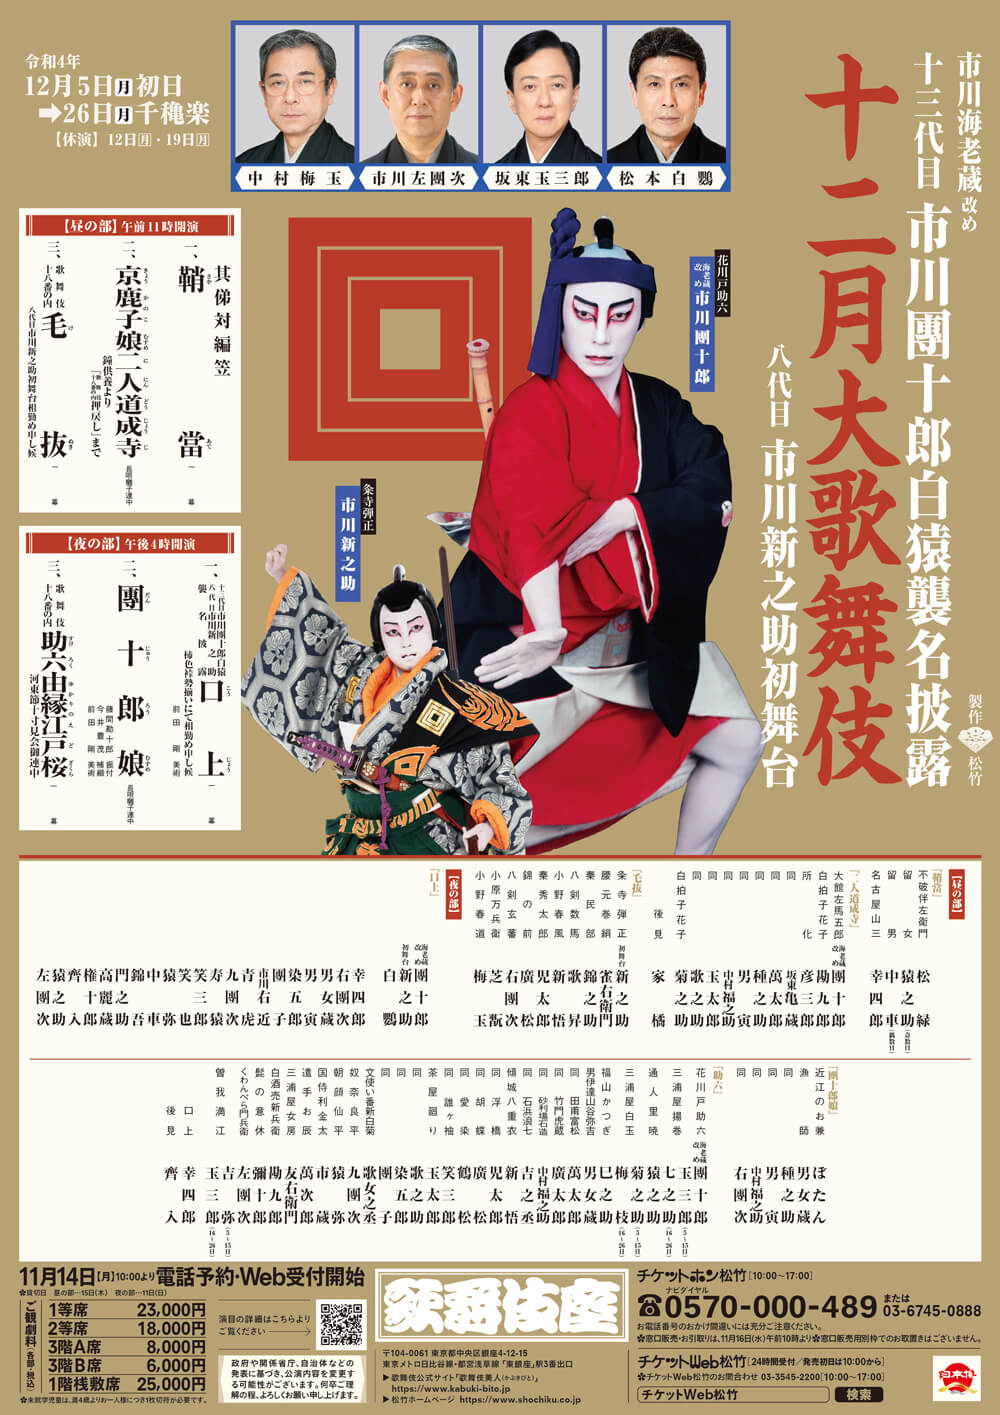 December Program at the Kabukiza Theatre